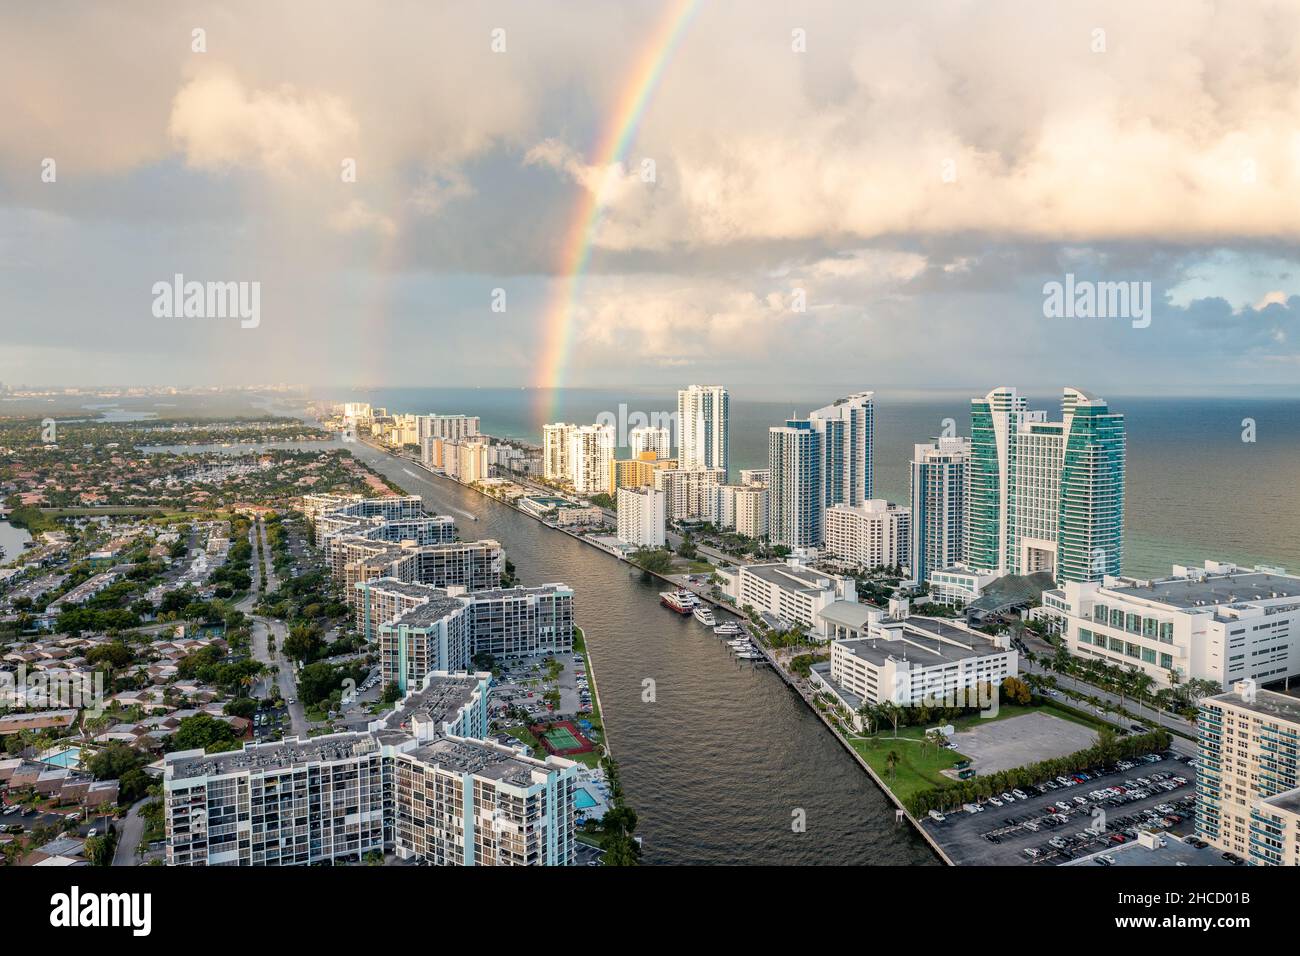 Miami hallandale hollywood fort lauderdale sunny isles Stock Photo